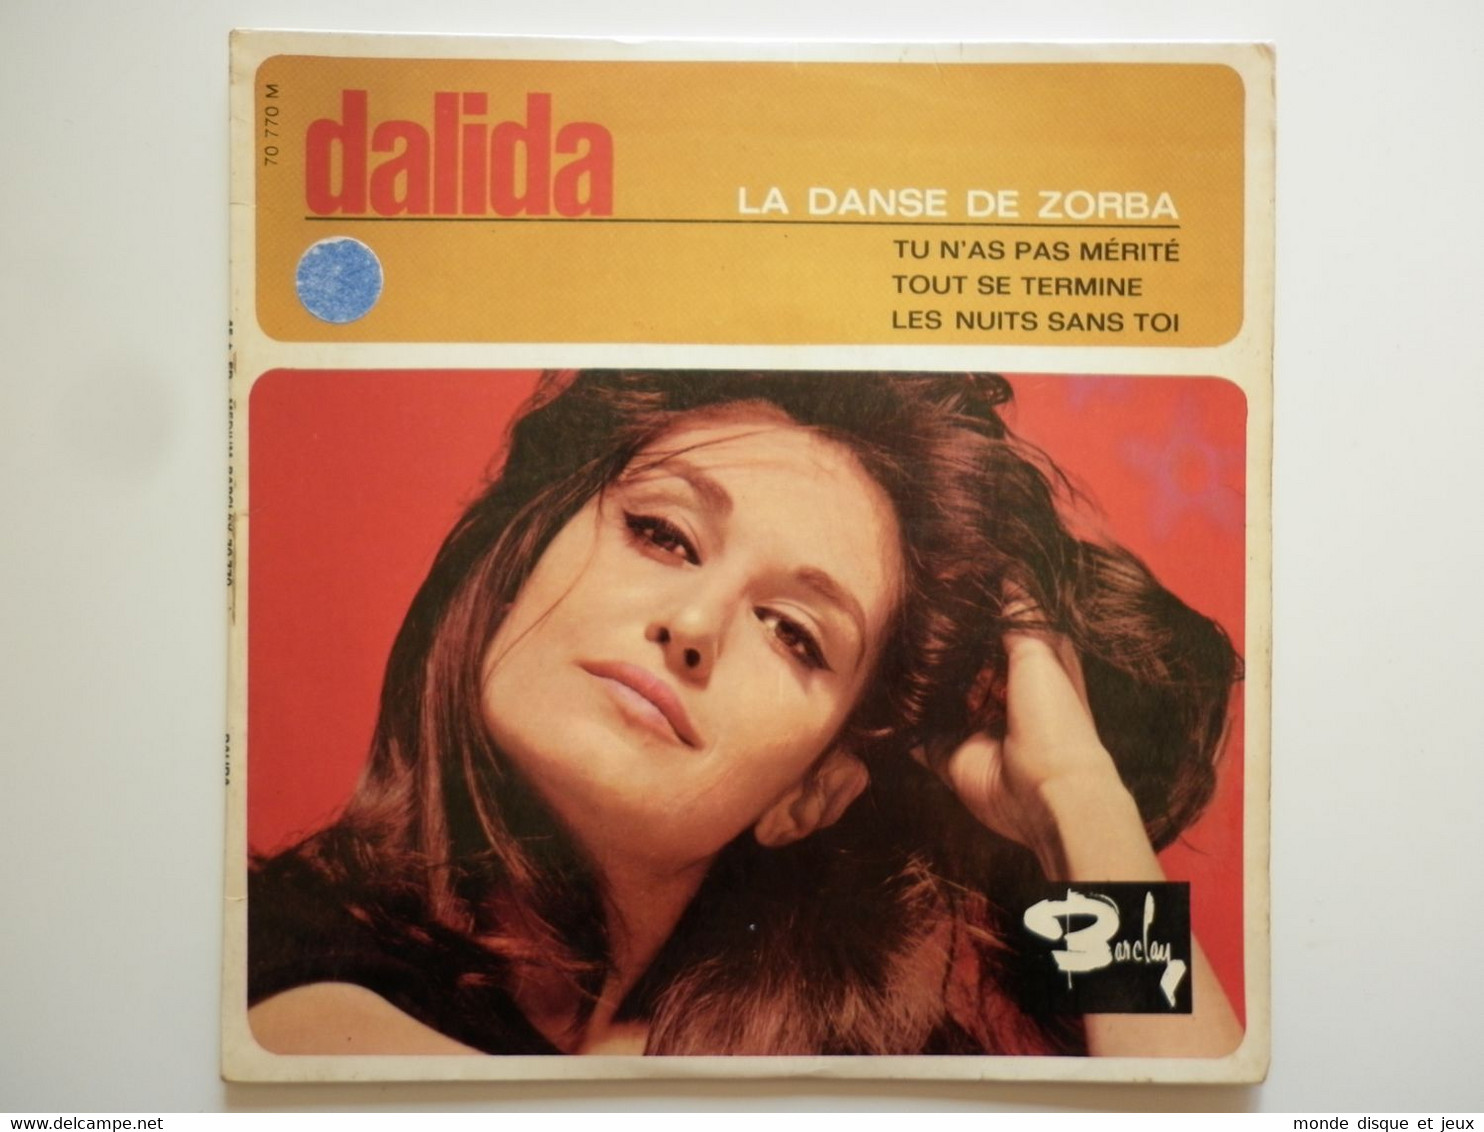 Dalida 45Tours EP Vinyle La Danse De Zorba - 45 T - Maxi-Single